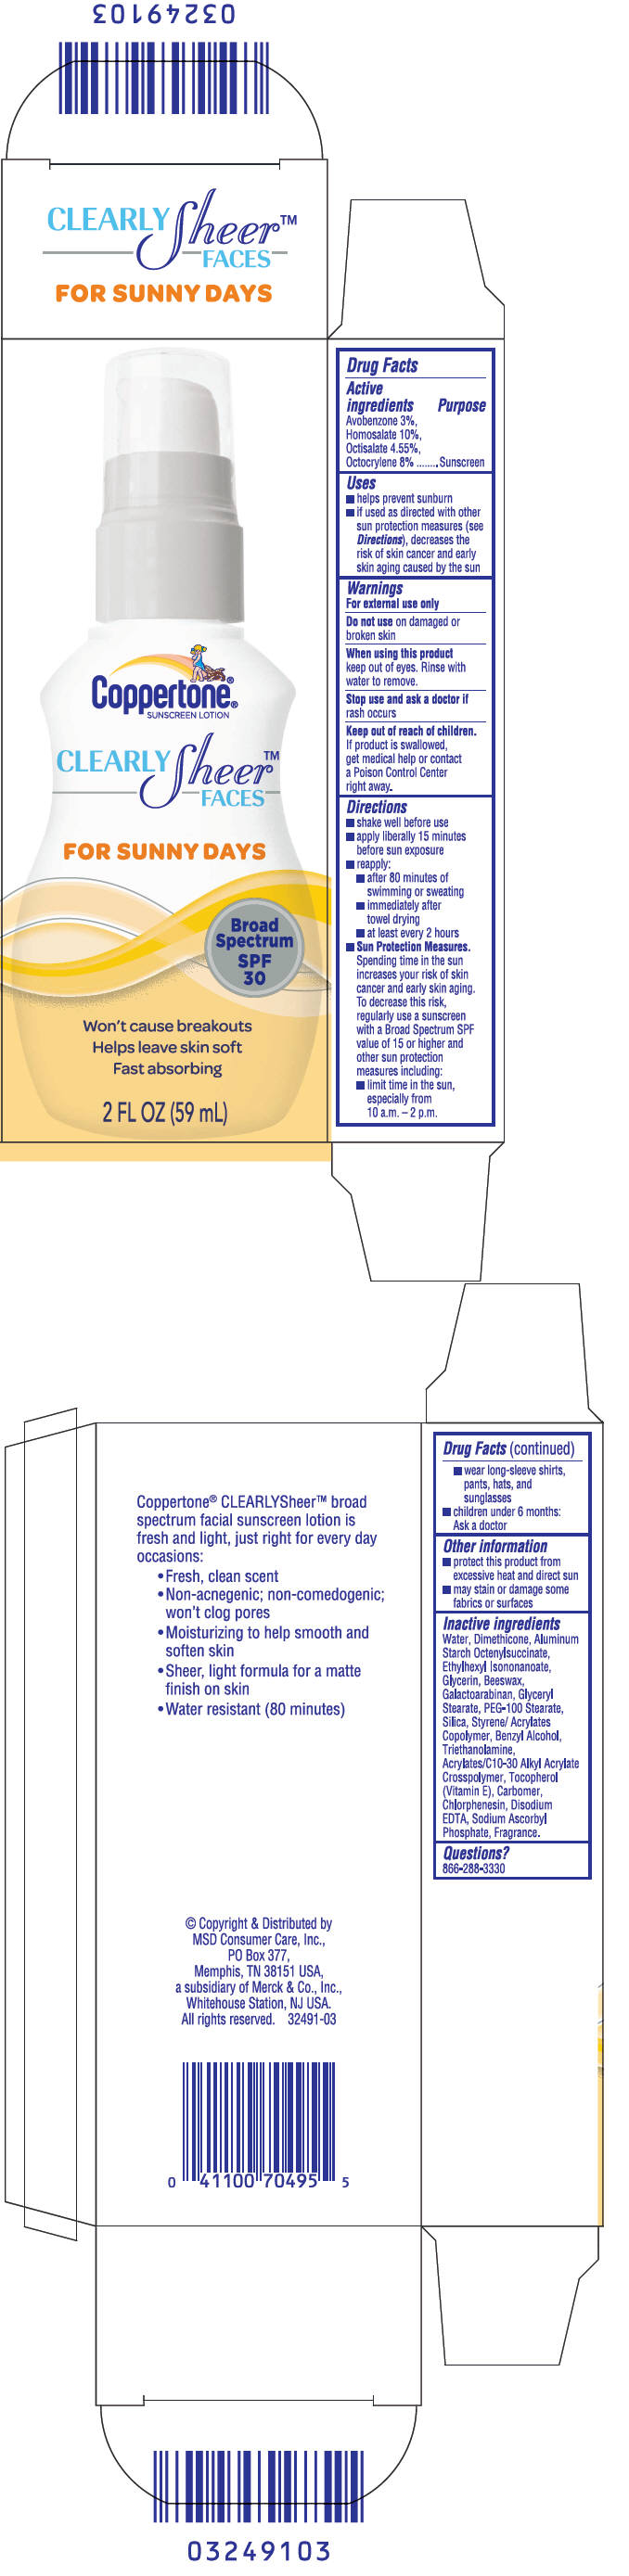 PRINCIPAL DISPLAY PANEL - 59 mL Bottle Carton